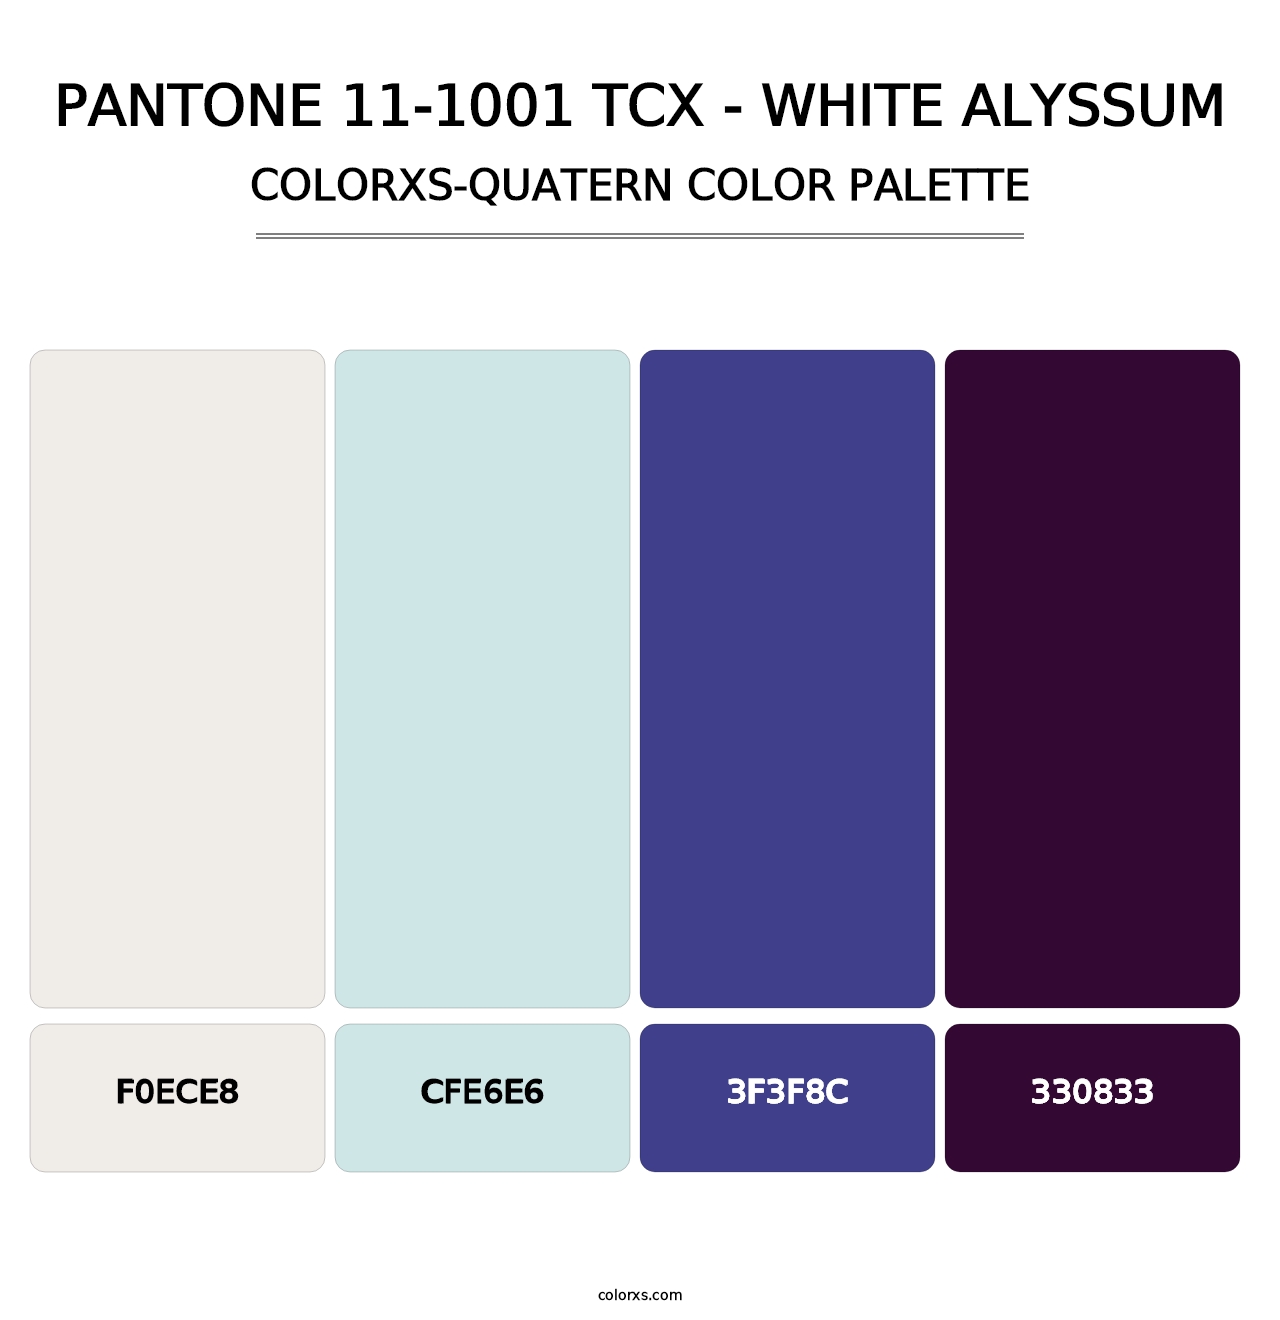 PANTONE 11-1001 TCX - White Alyssum - Colorxs Quatern Palette